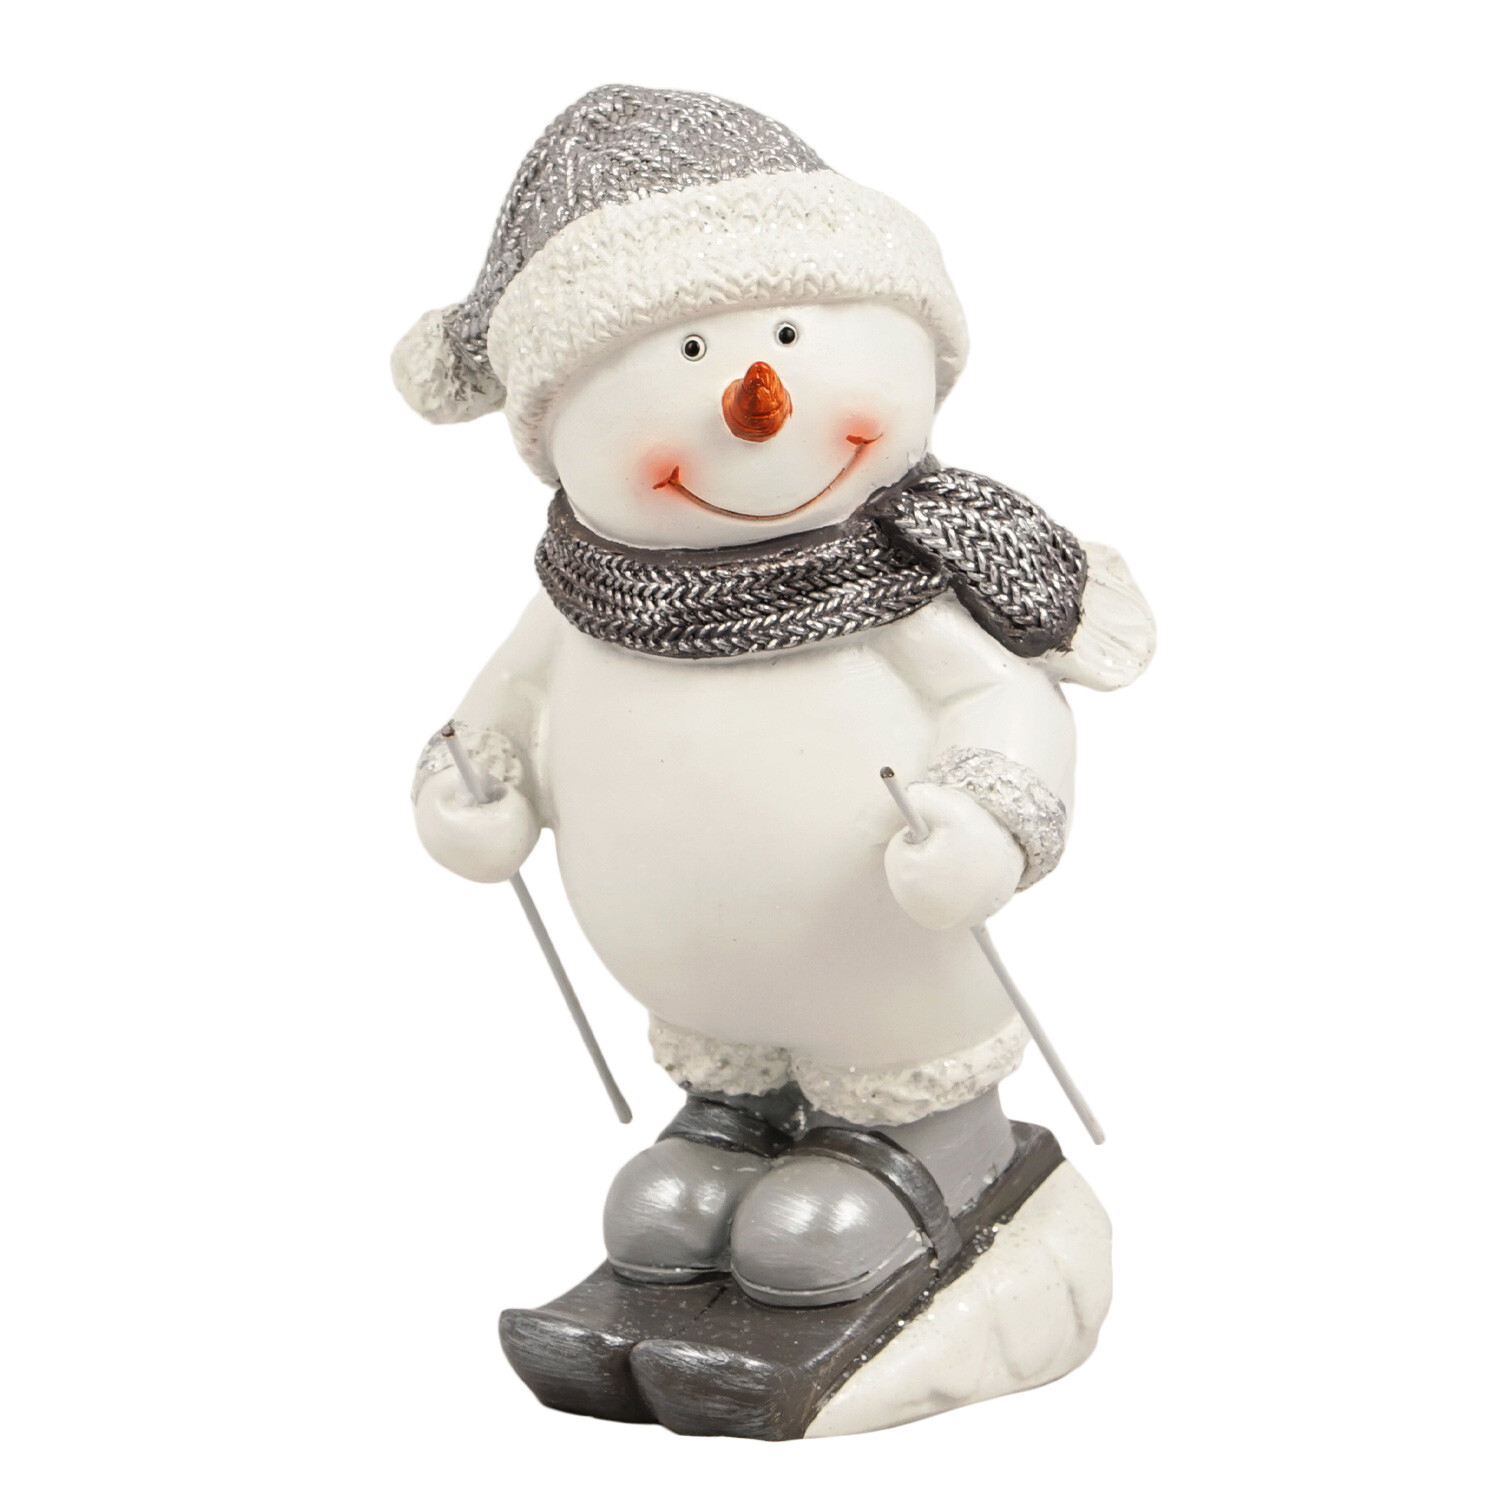 Skiing Snowman Ornament - White Image 1